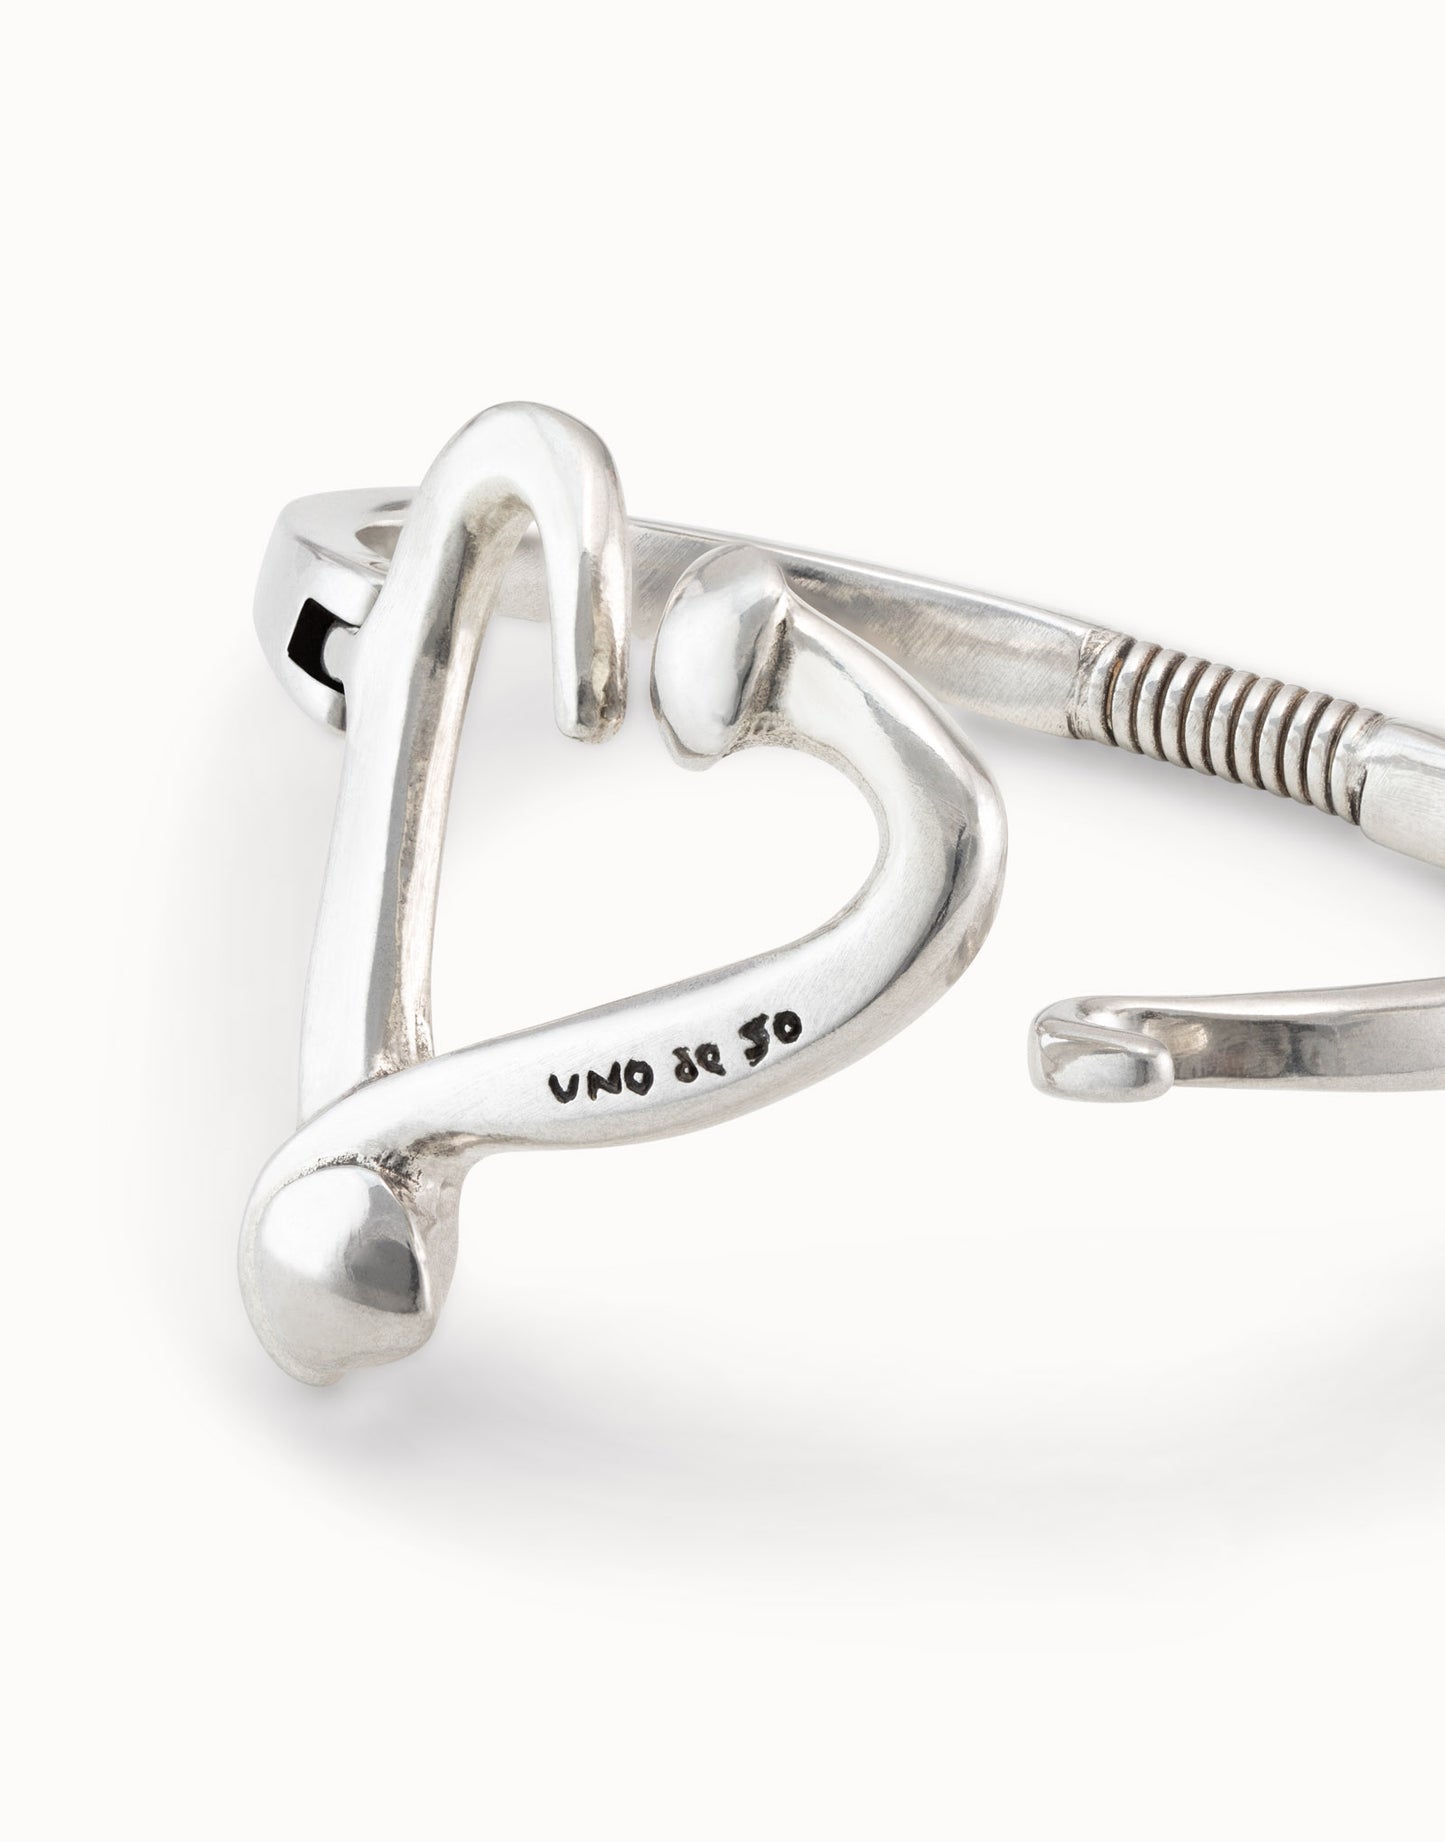 unode50 heart-shaped one love bracelet, open clasp detail